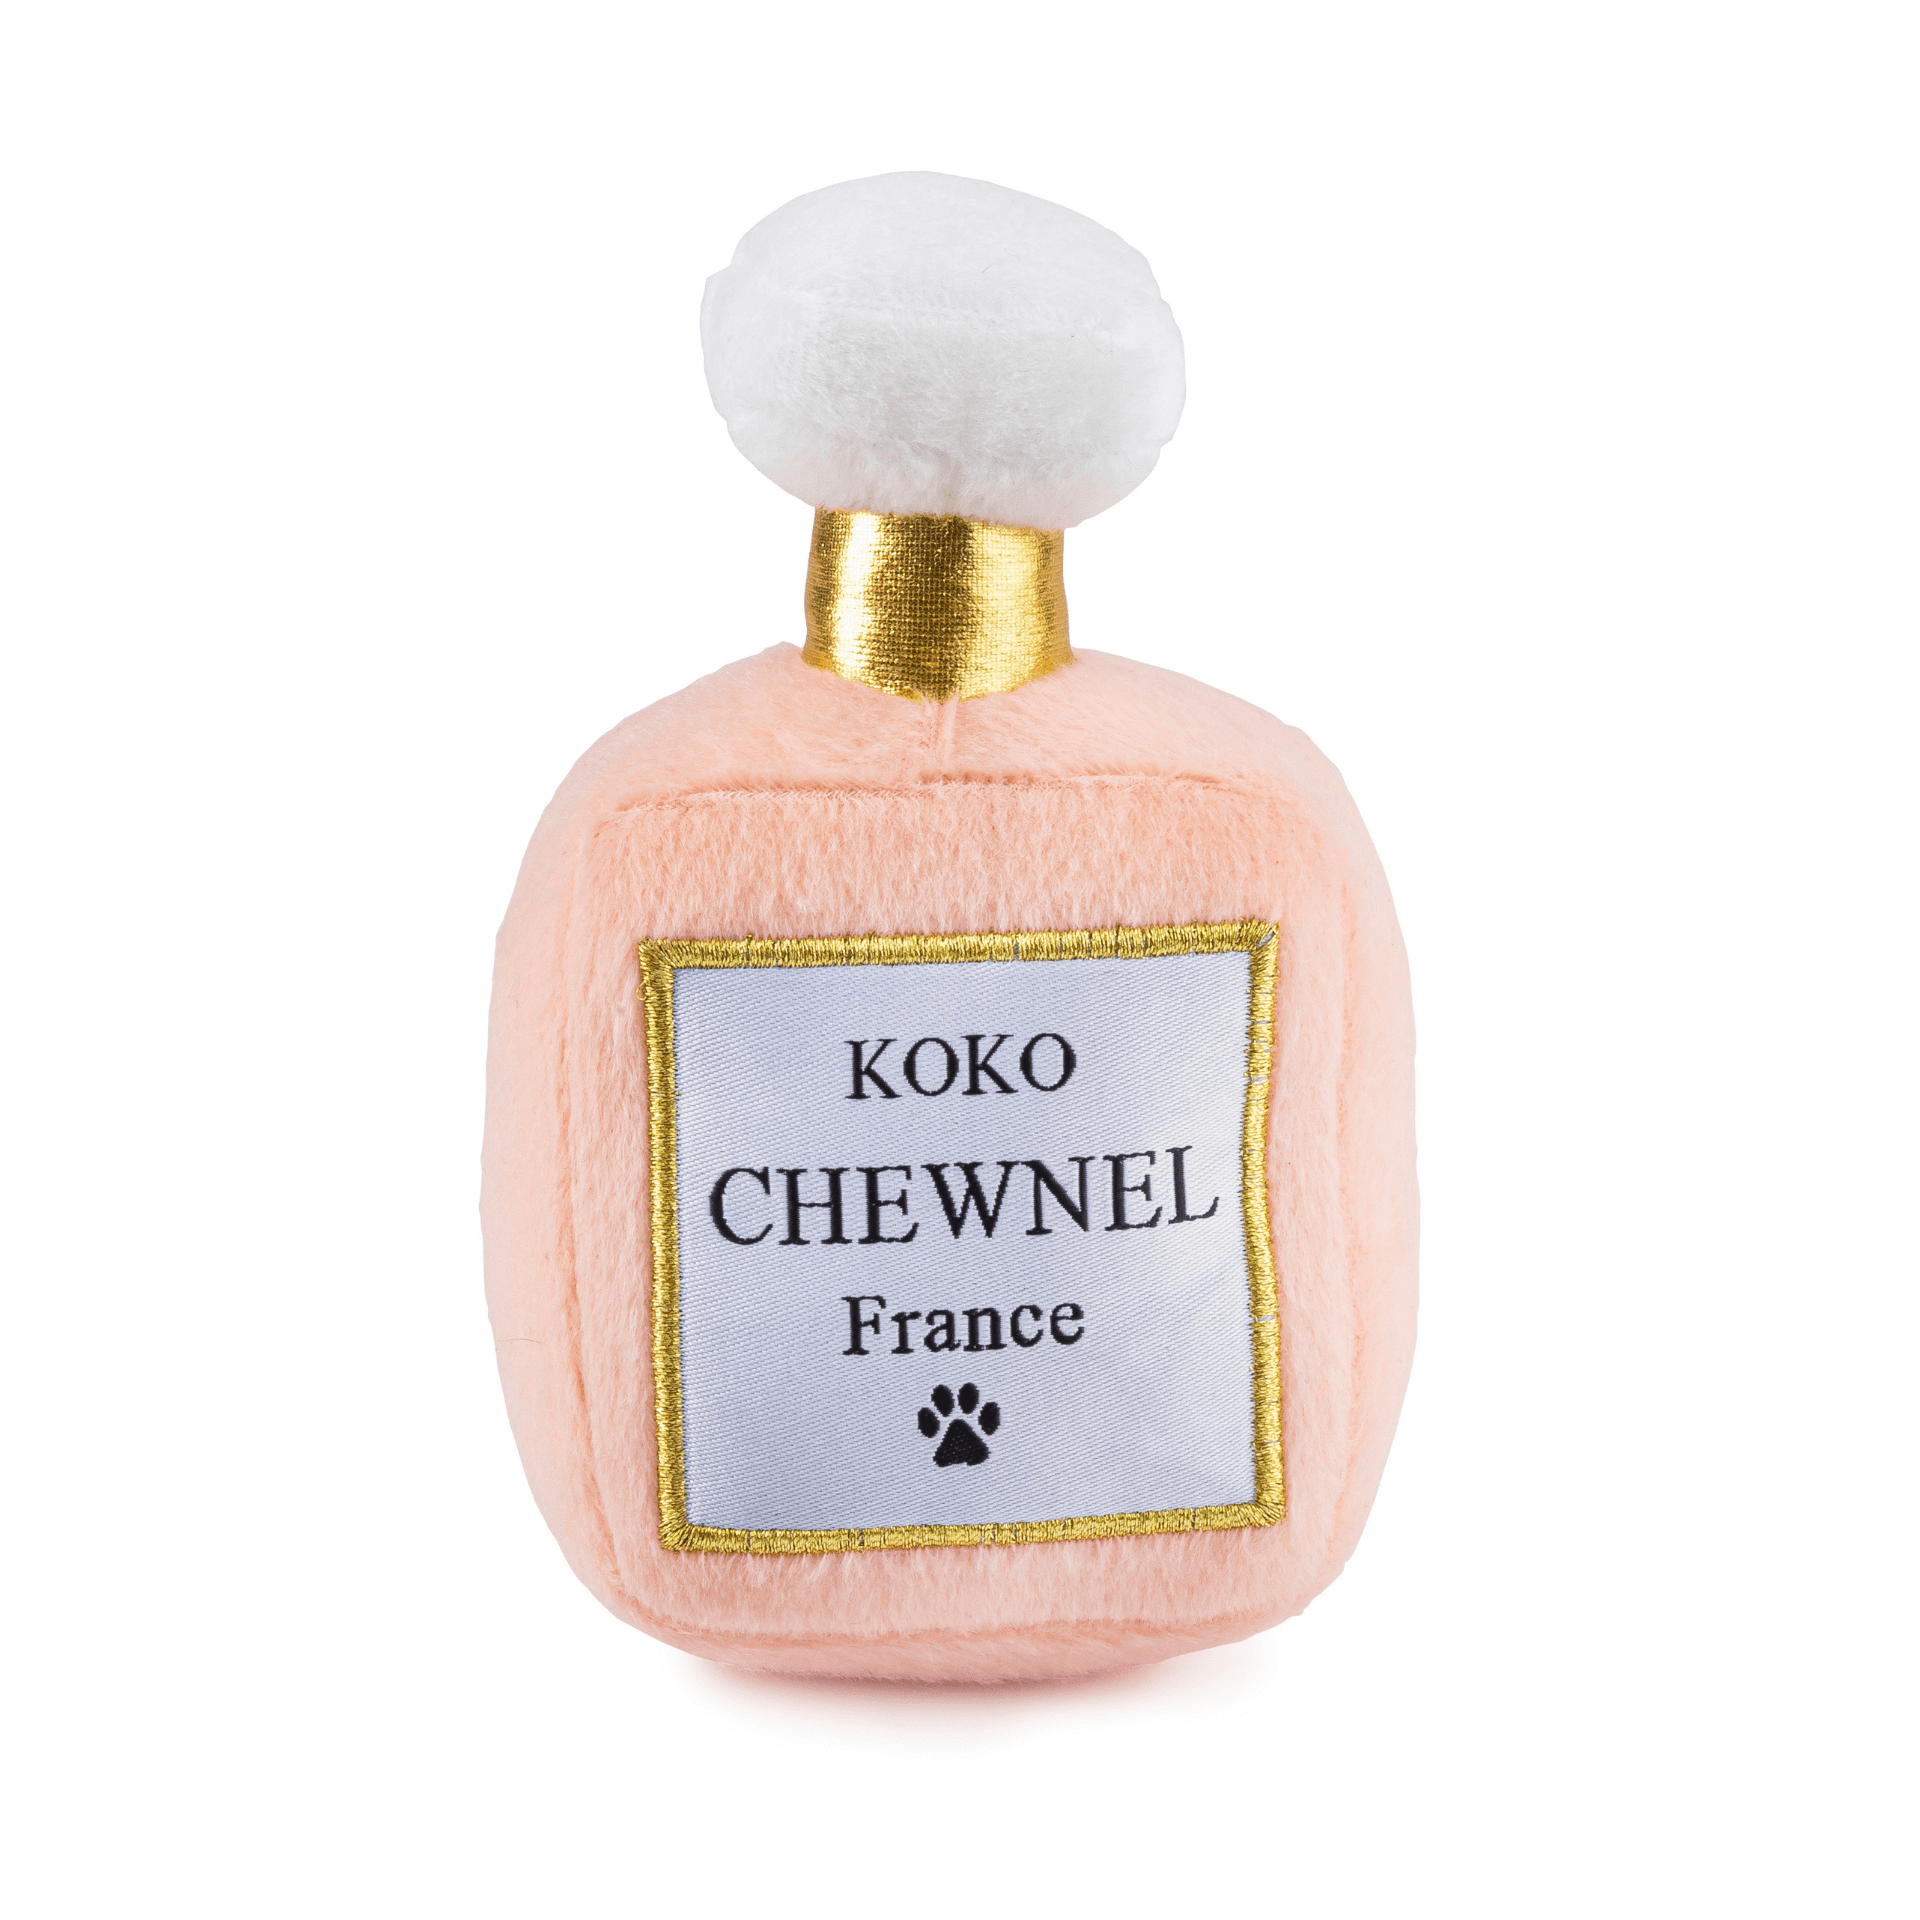 Koko Chewnel dog toy, let's pawty